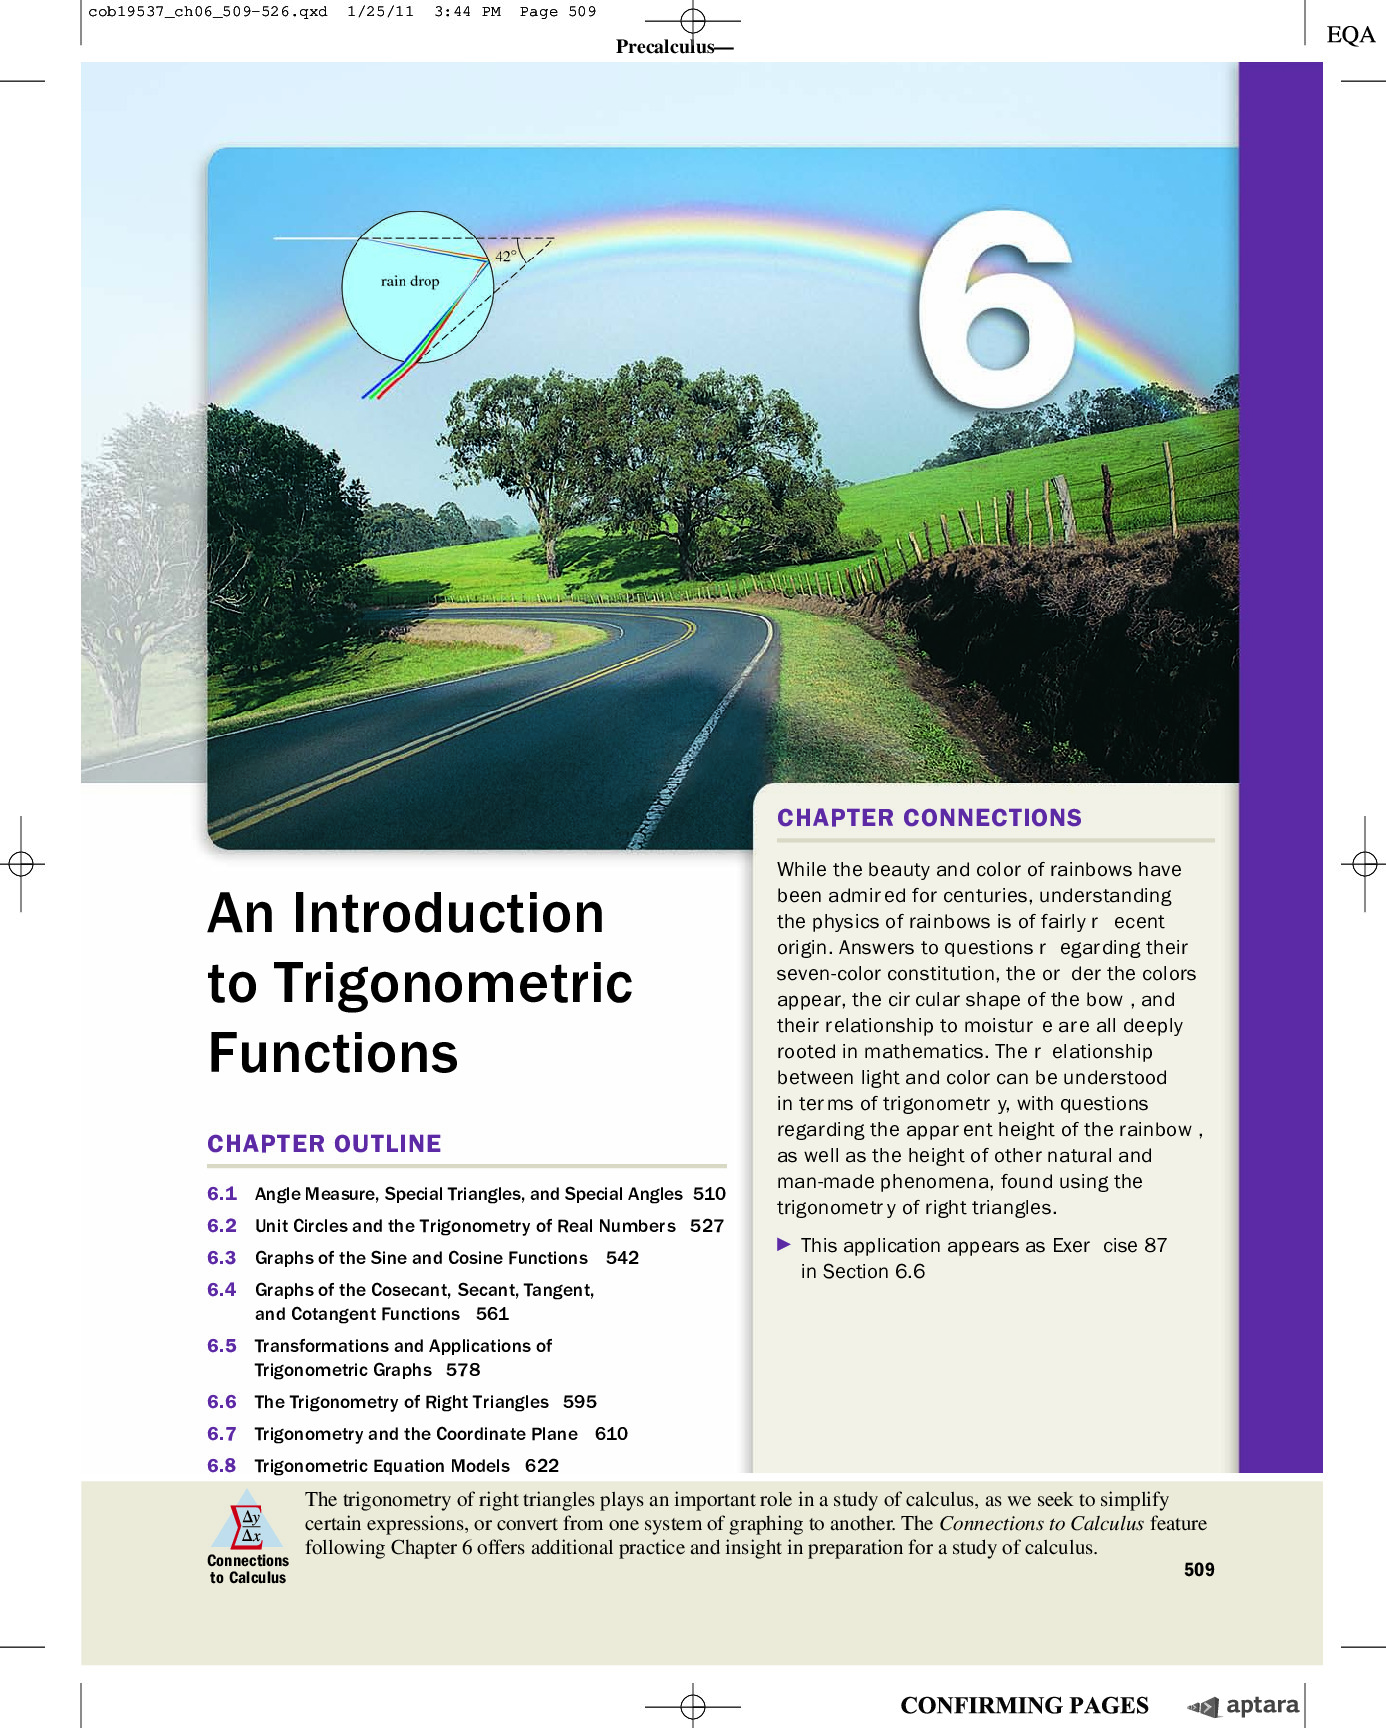 Intro_to_Trigonometric_Functions_Precalculus